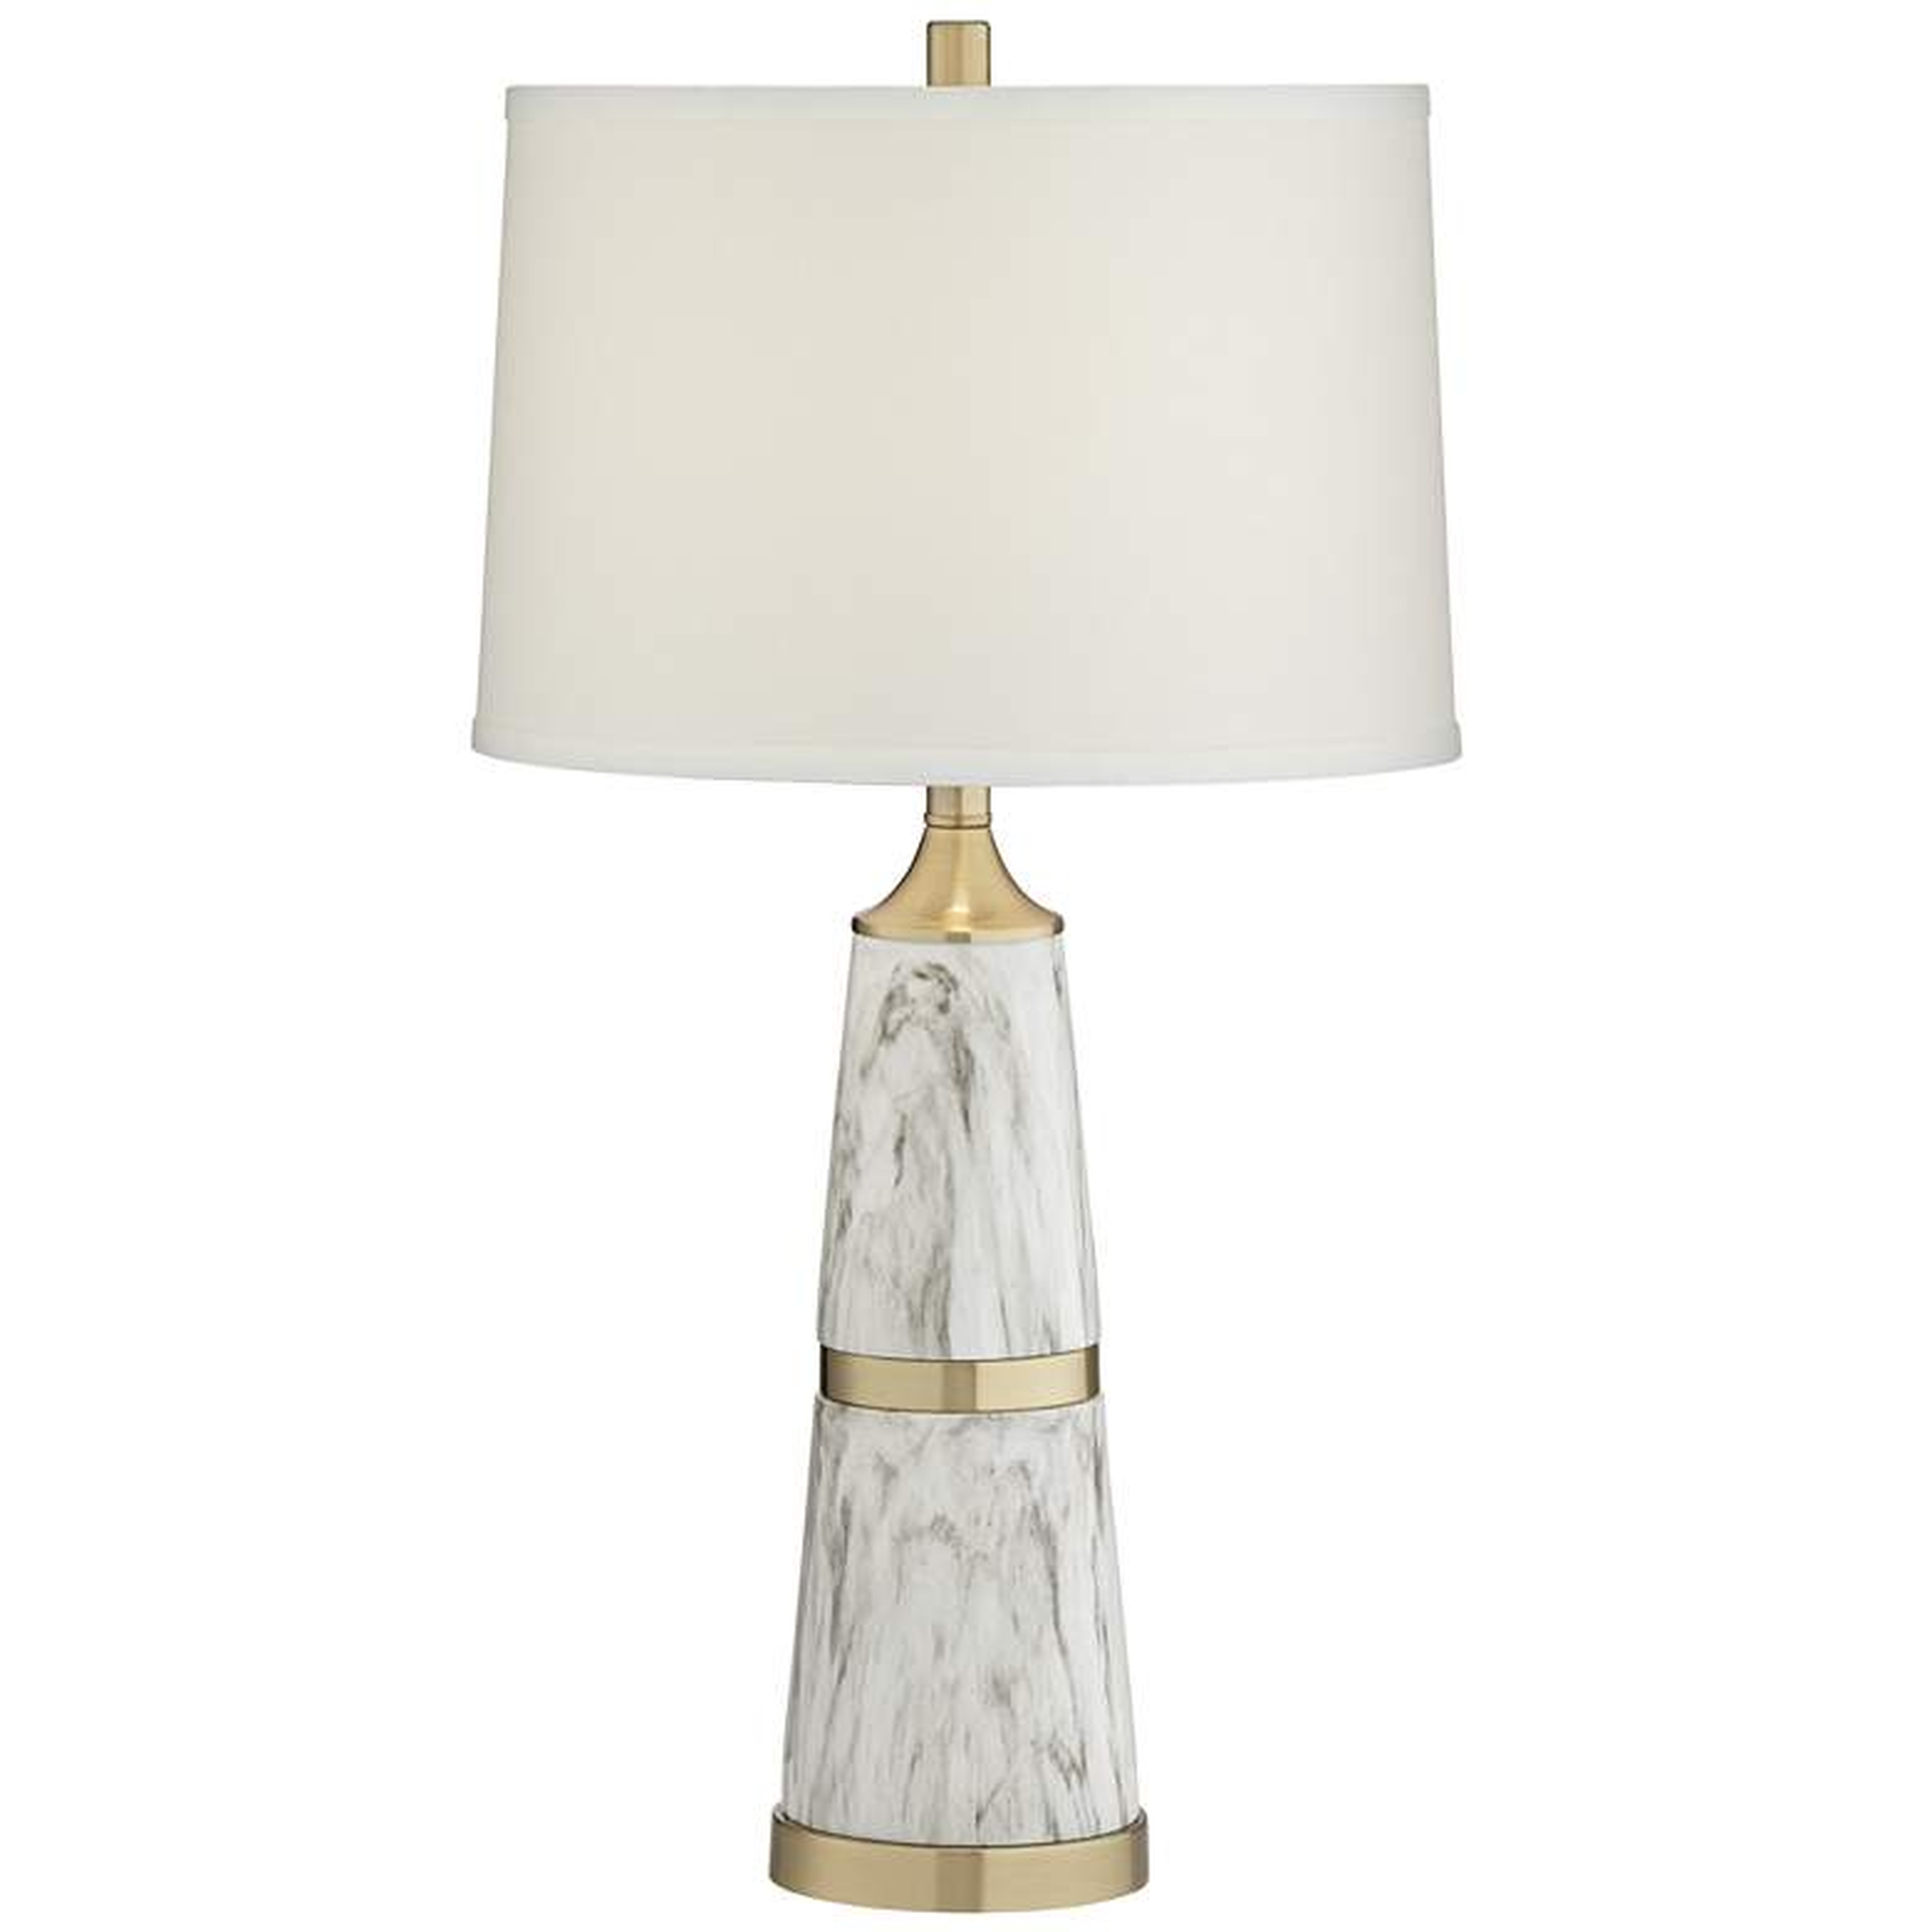 Possini Euro Irina White Faux Marble Table Lamp - Style # 72R79 - Lamps Plus